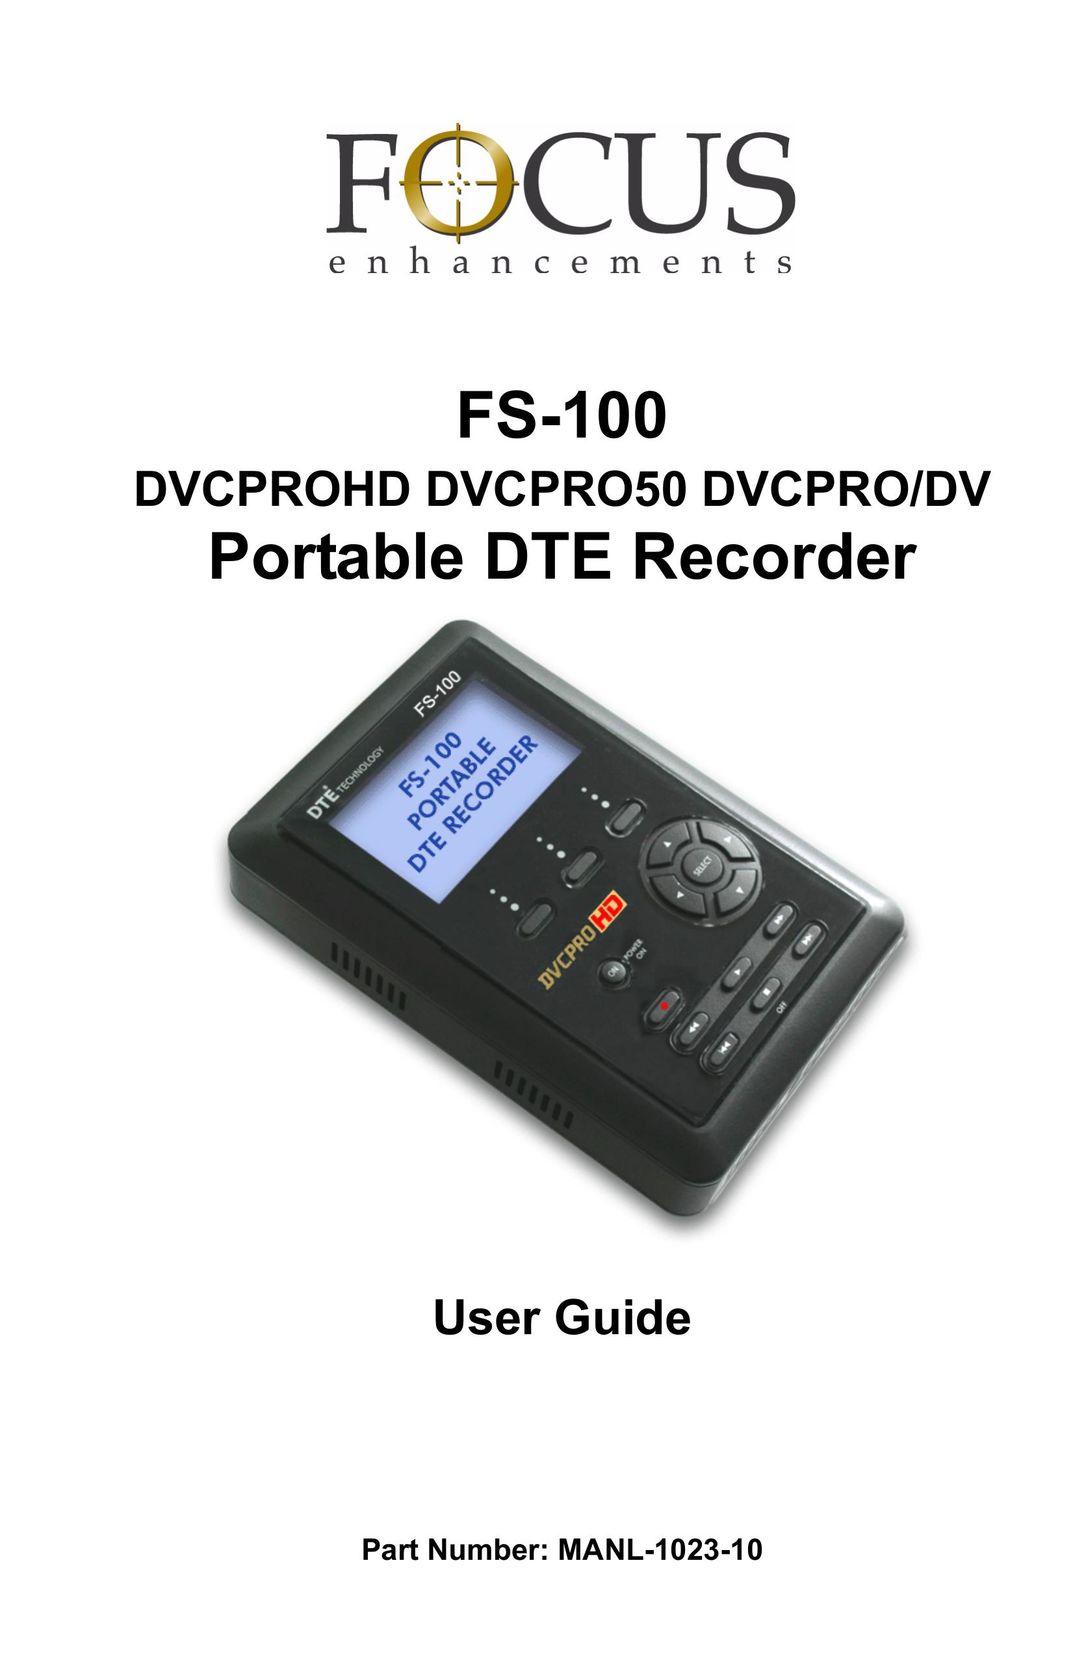 FOCUS Enhancements DVCPRO/DV Microcassette Recorder User Manual